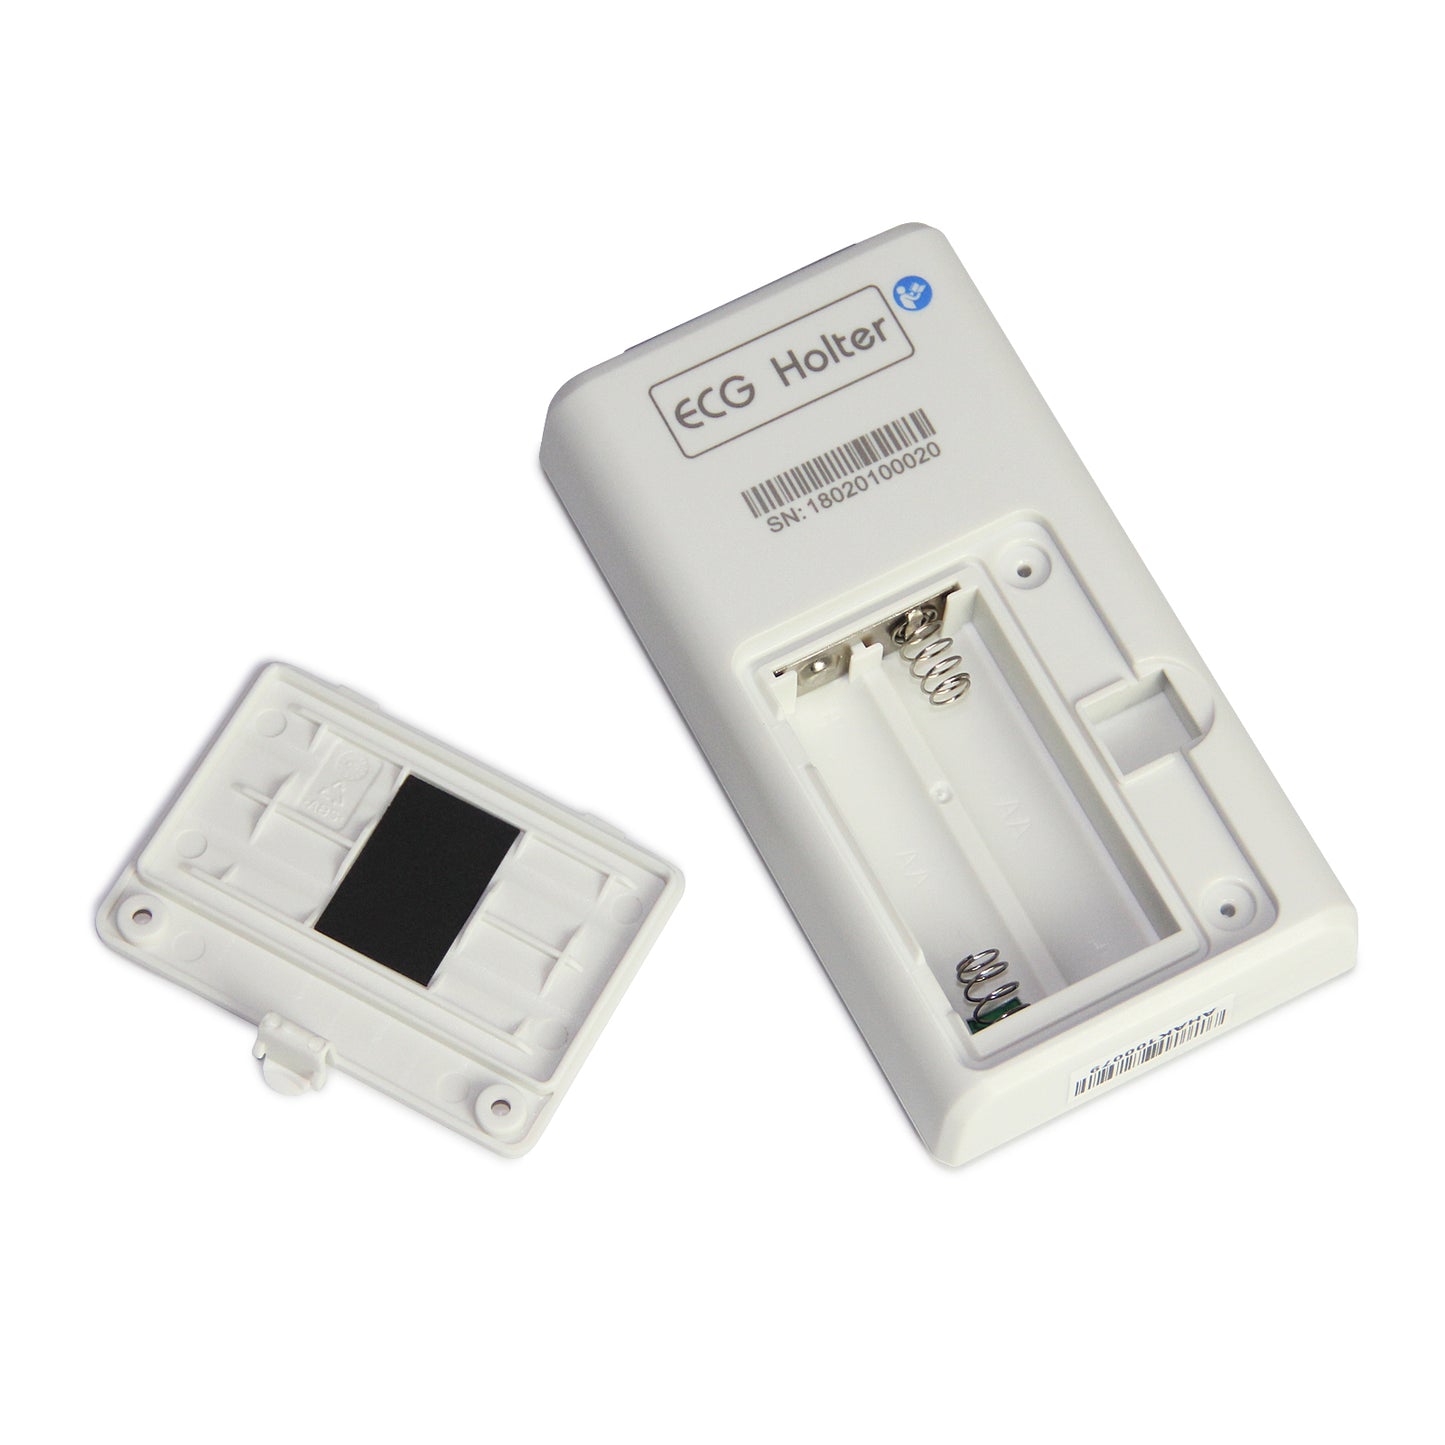 3 Lead Holter ECG Monitor Machine Recorder Analyzer Sync Software TLC5007